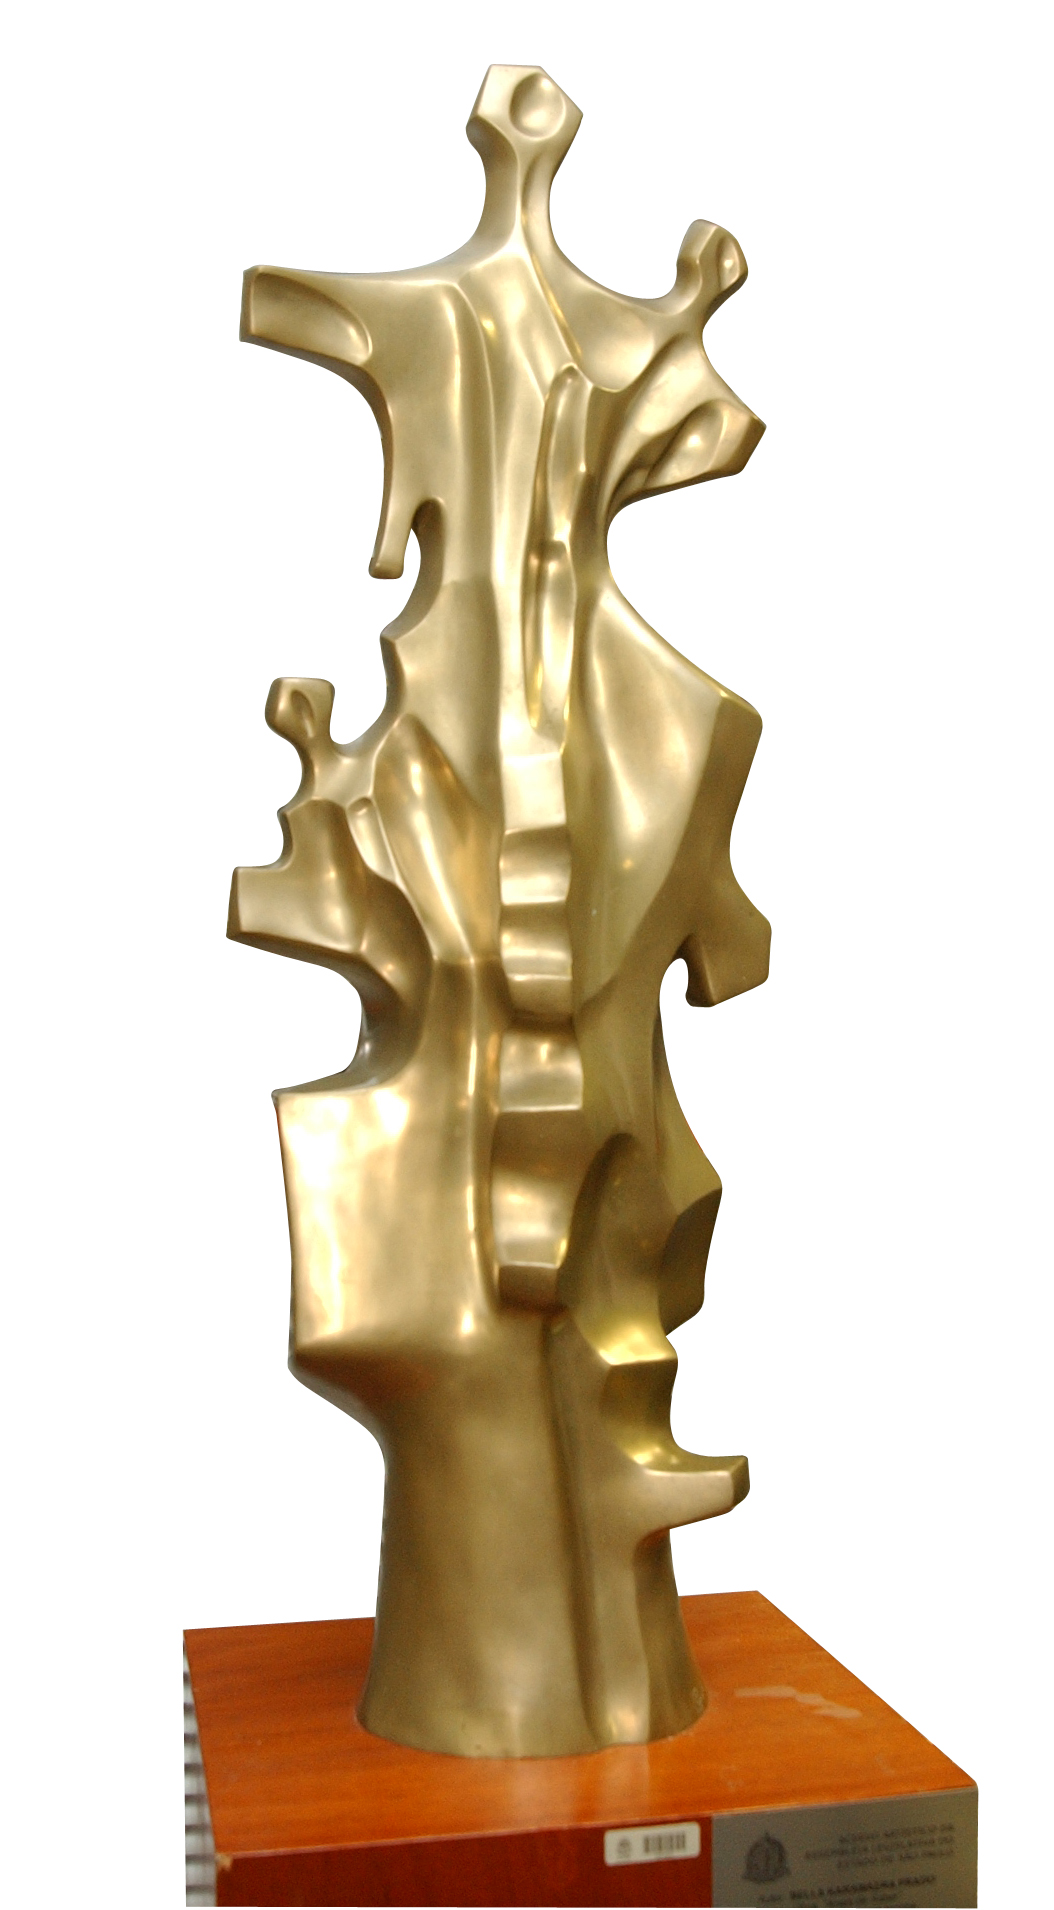 Obra em bronze nsia de Saber<a style='float:right;color:#ccc' href='https://www3.al.sp.gov.br/repositorio/noticia/hist/Bella Prado Ansia Saber.jpg' target=_blank><i class='bi bi-zoom-in'></i> Clique para ver a imagem </a>